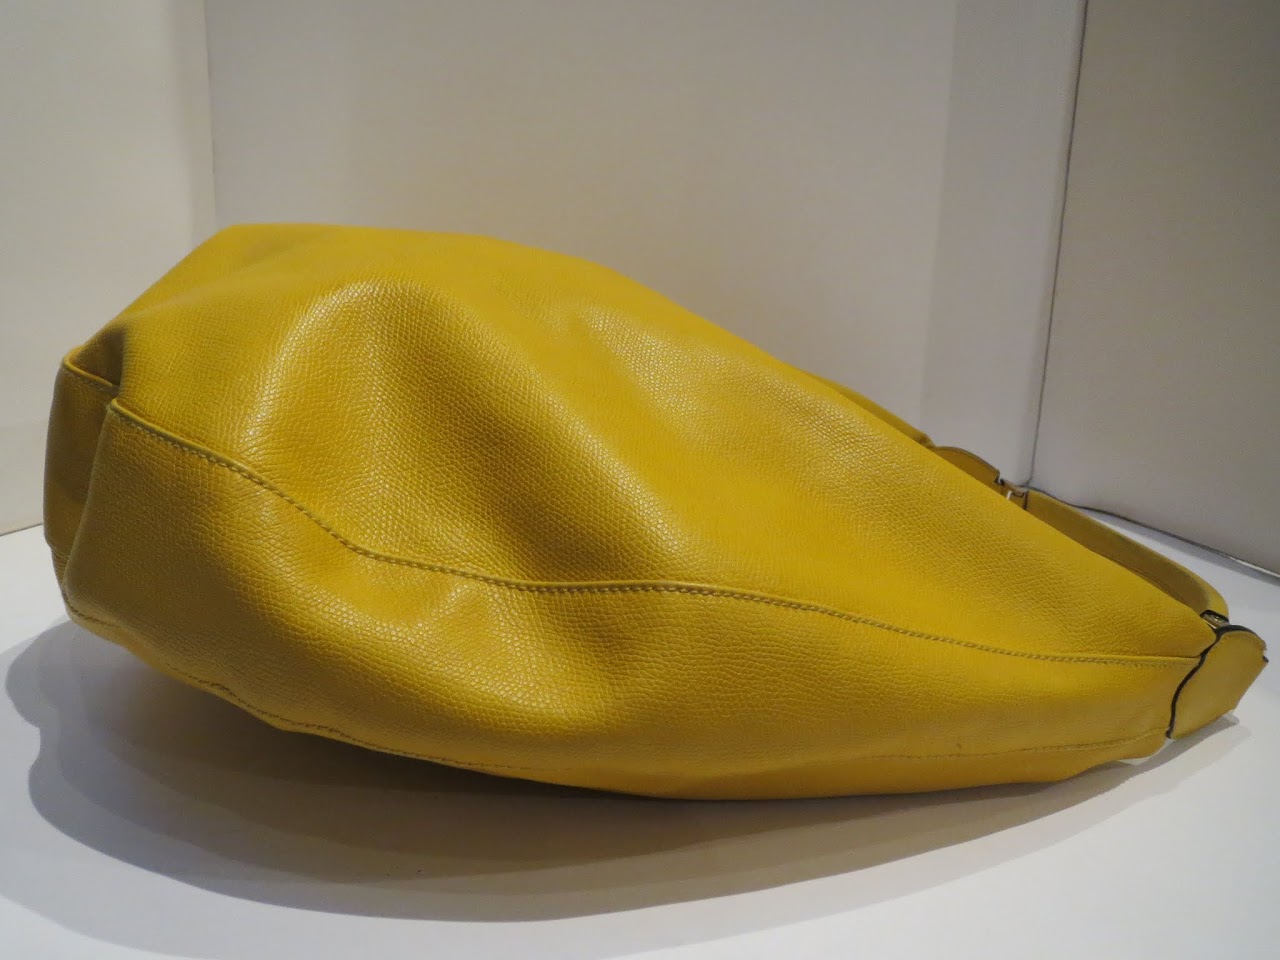 Valextra Namaste Bag in Burnt Yellow